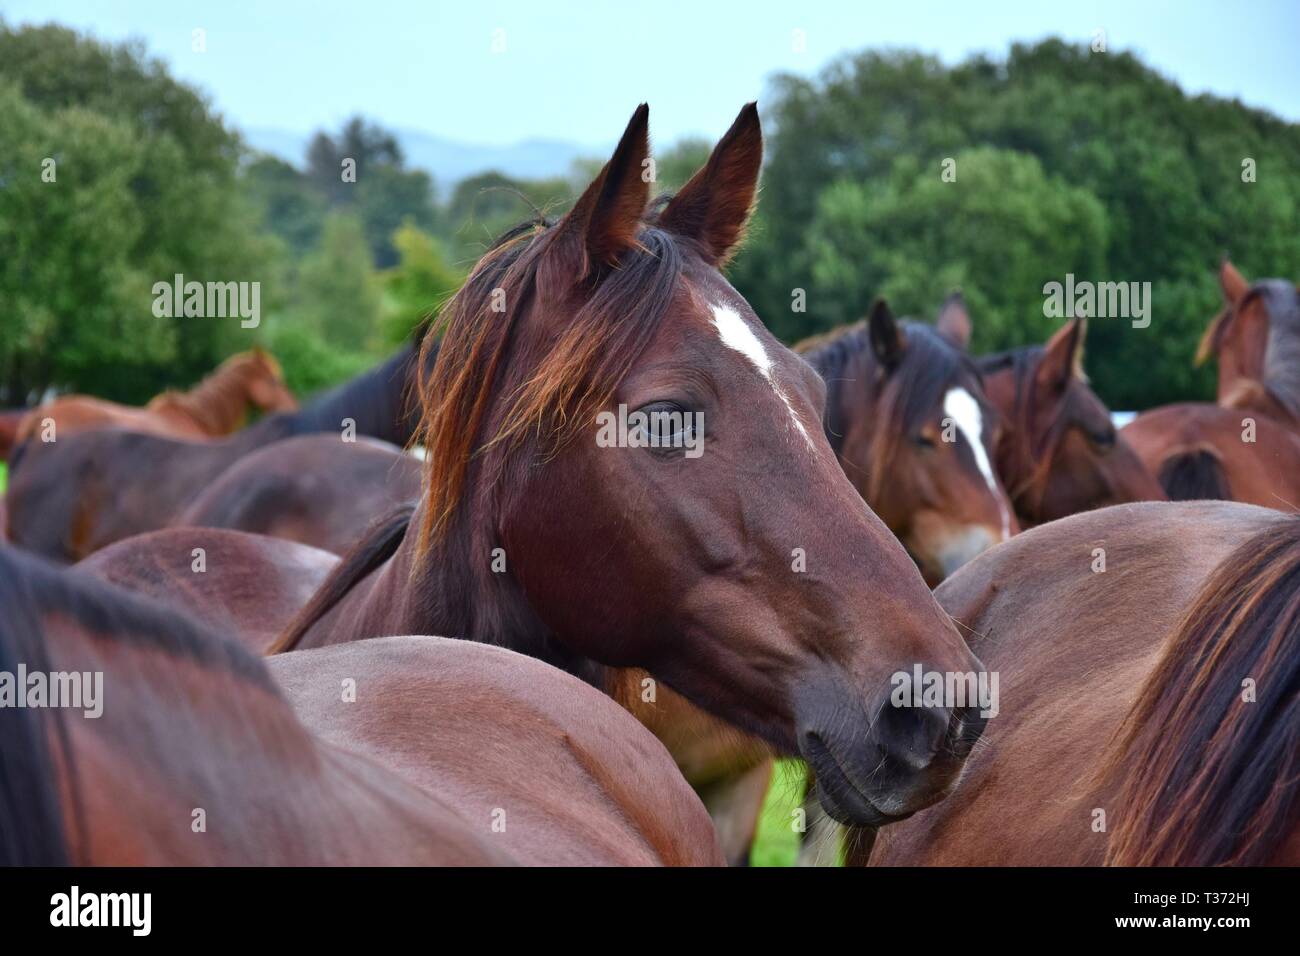 Portrait of a dark chestnut horse amidst other horses. Ireland. Stock Photo